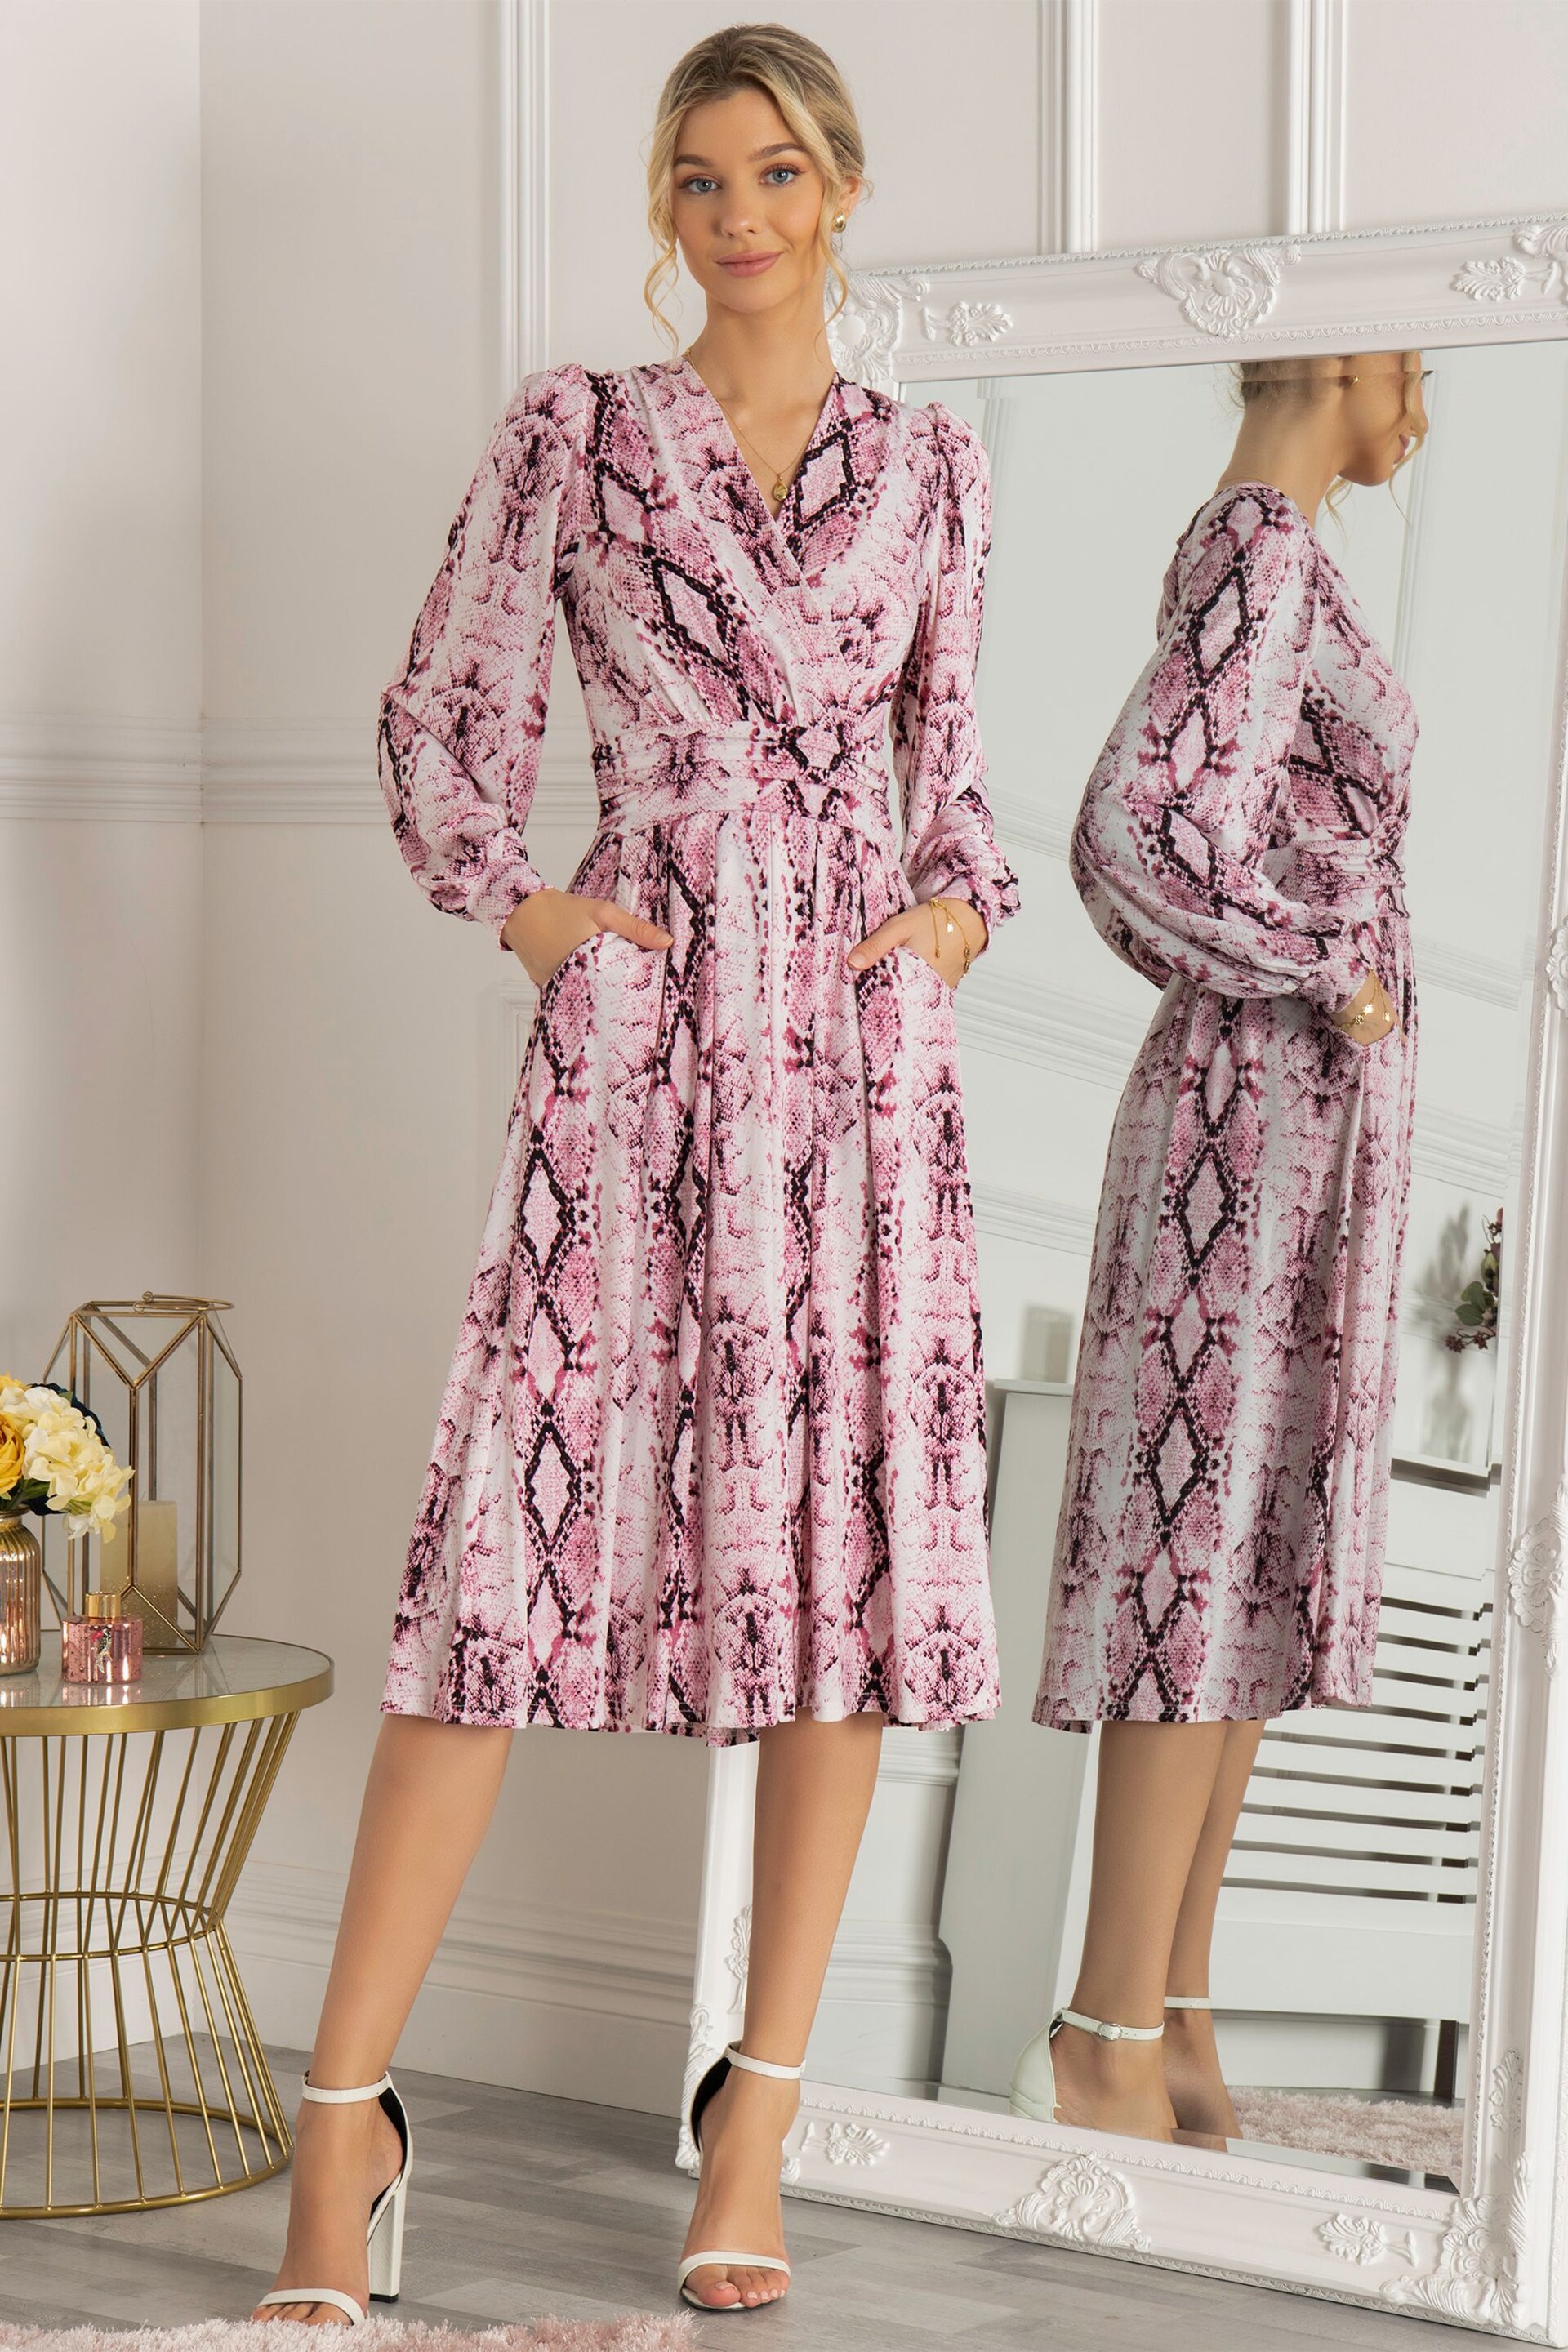 Jolie Moi Pink Harper Long Sleeve Jersey Dress - Image 1 of 5